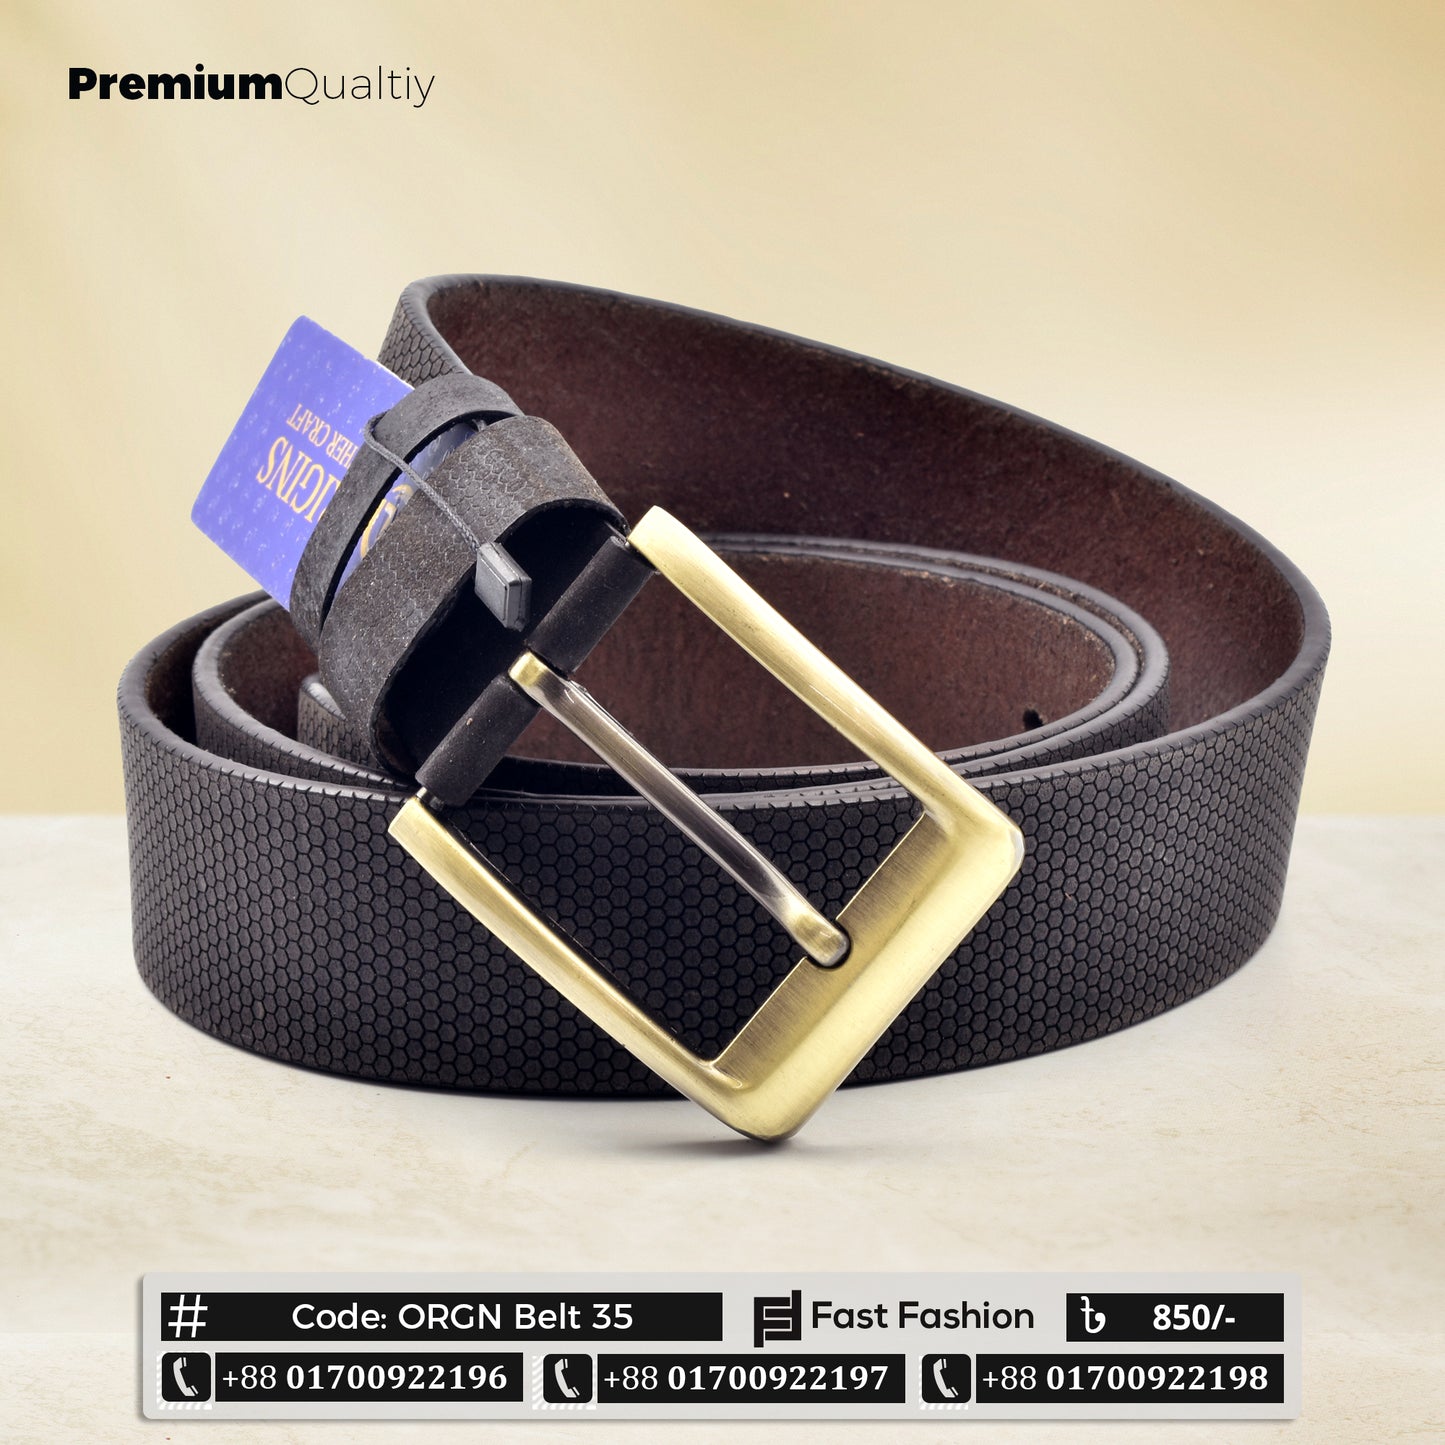 Stylish Premium Quality Original Leather Belt - ORGN Belt 35